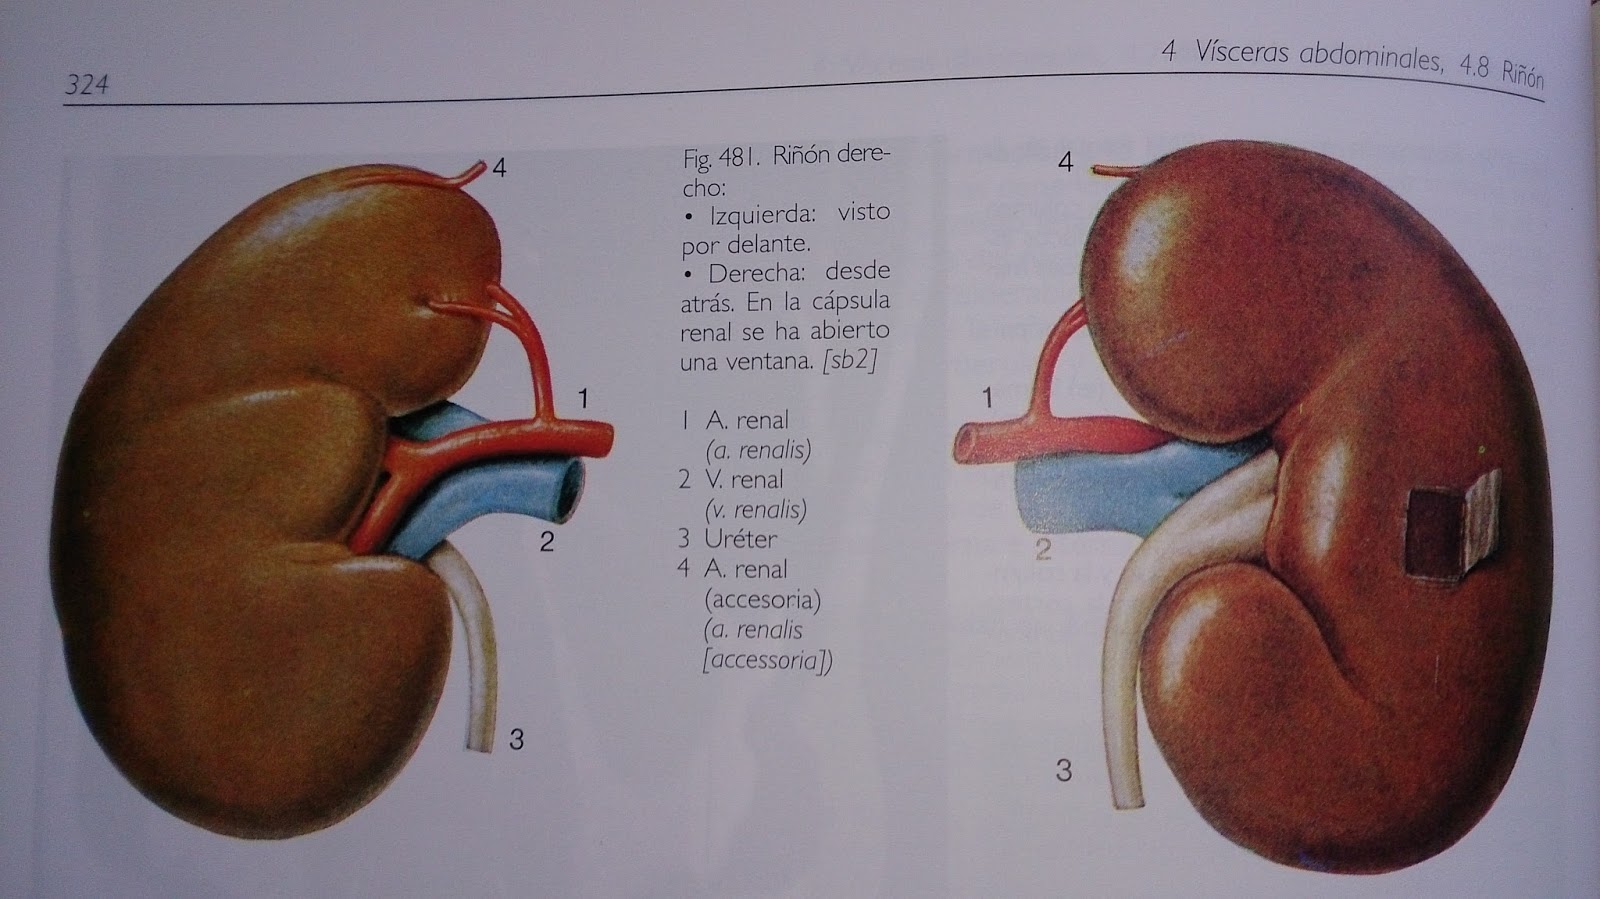 Fisiologia e anatomia renal